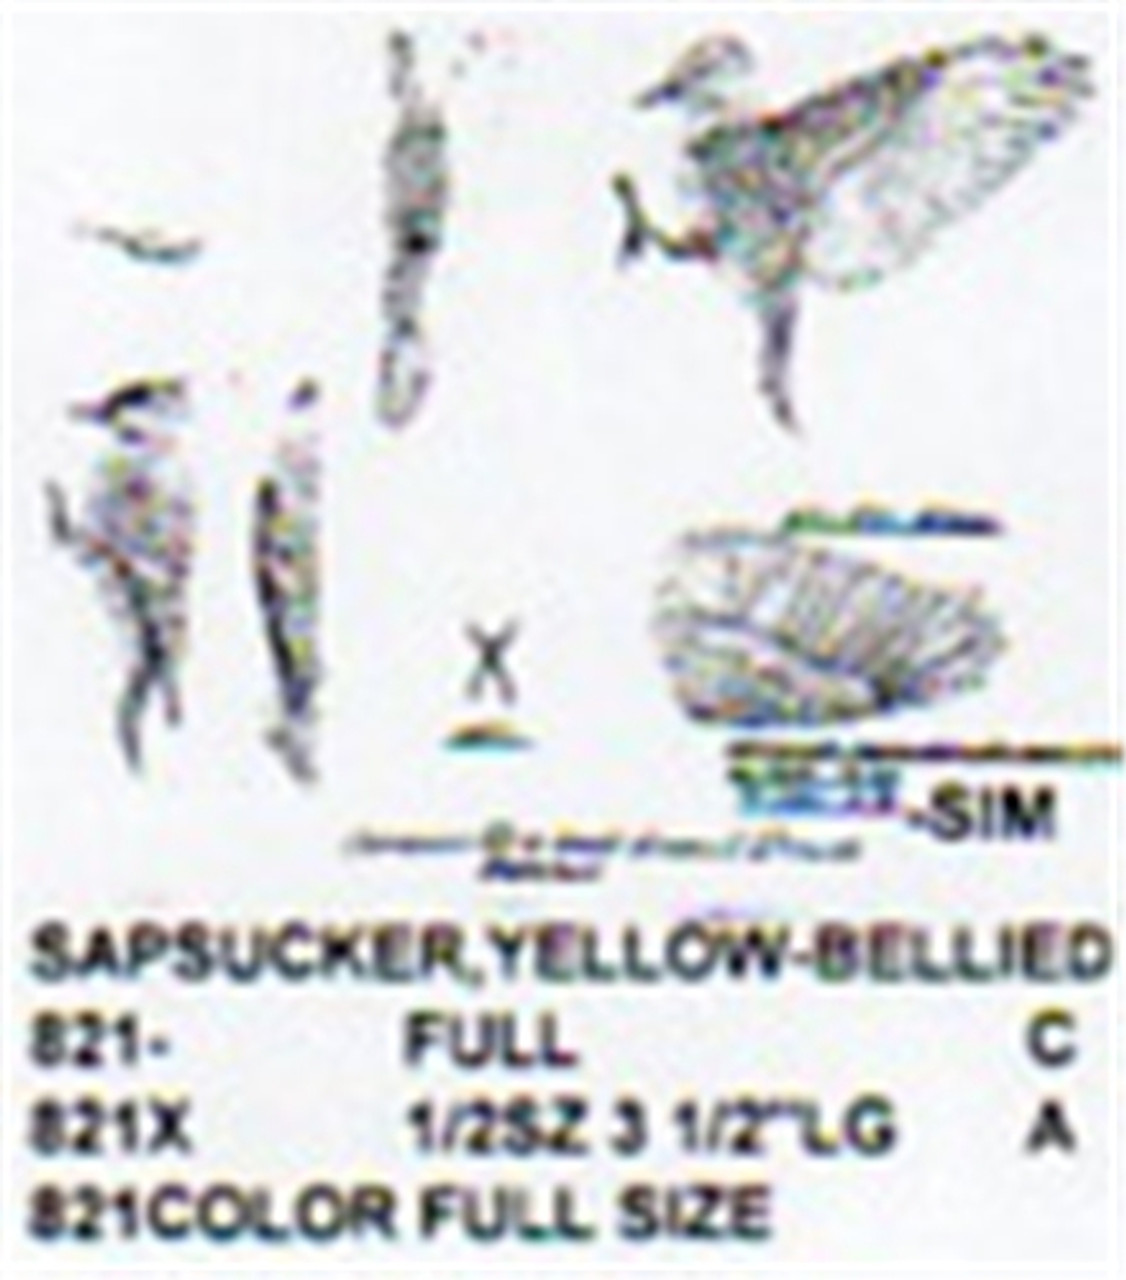 Yellow Bellied Sapsucker On Tree/Flying/landing